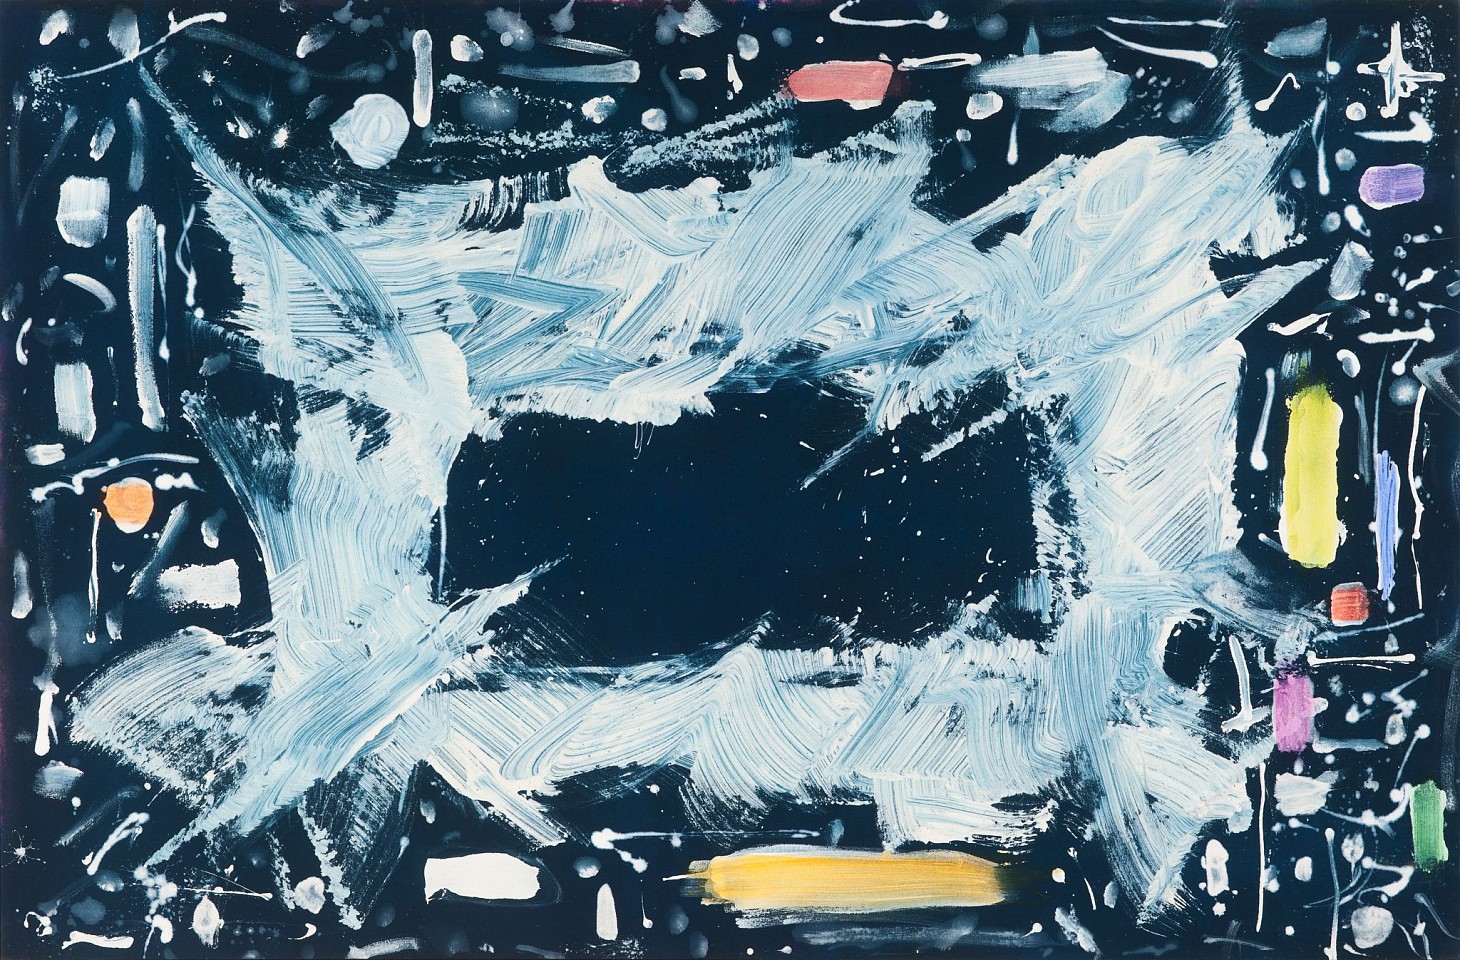 Dan Christensen, Night Dancer Blue, 1999
Acrylic on canvas, 55 x 85 in. (139.7 x 215.9 cm)
CHR-00215